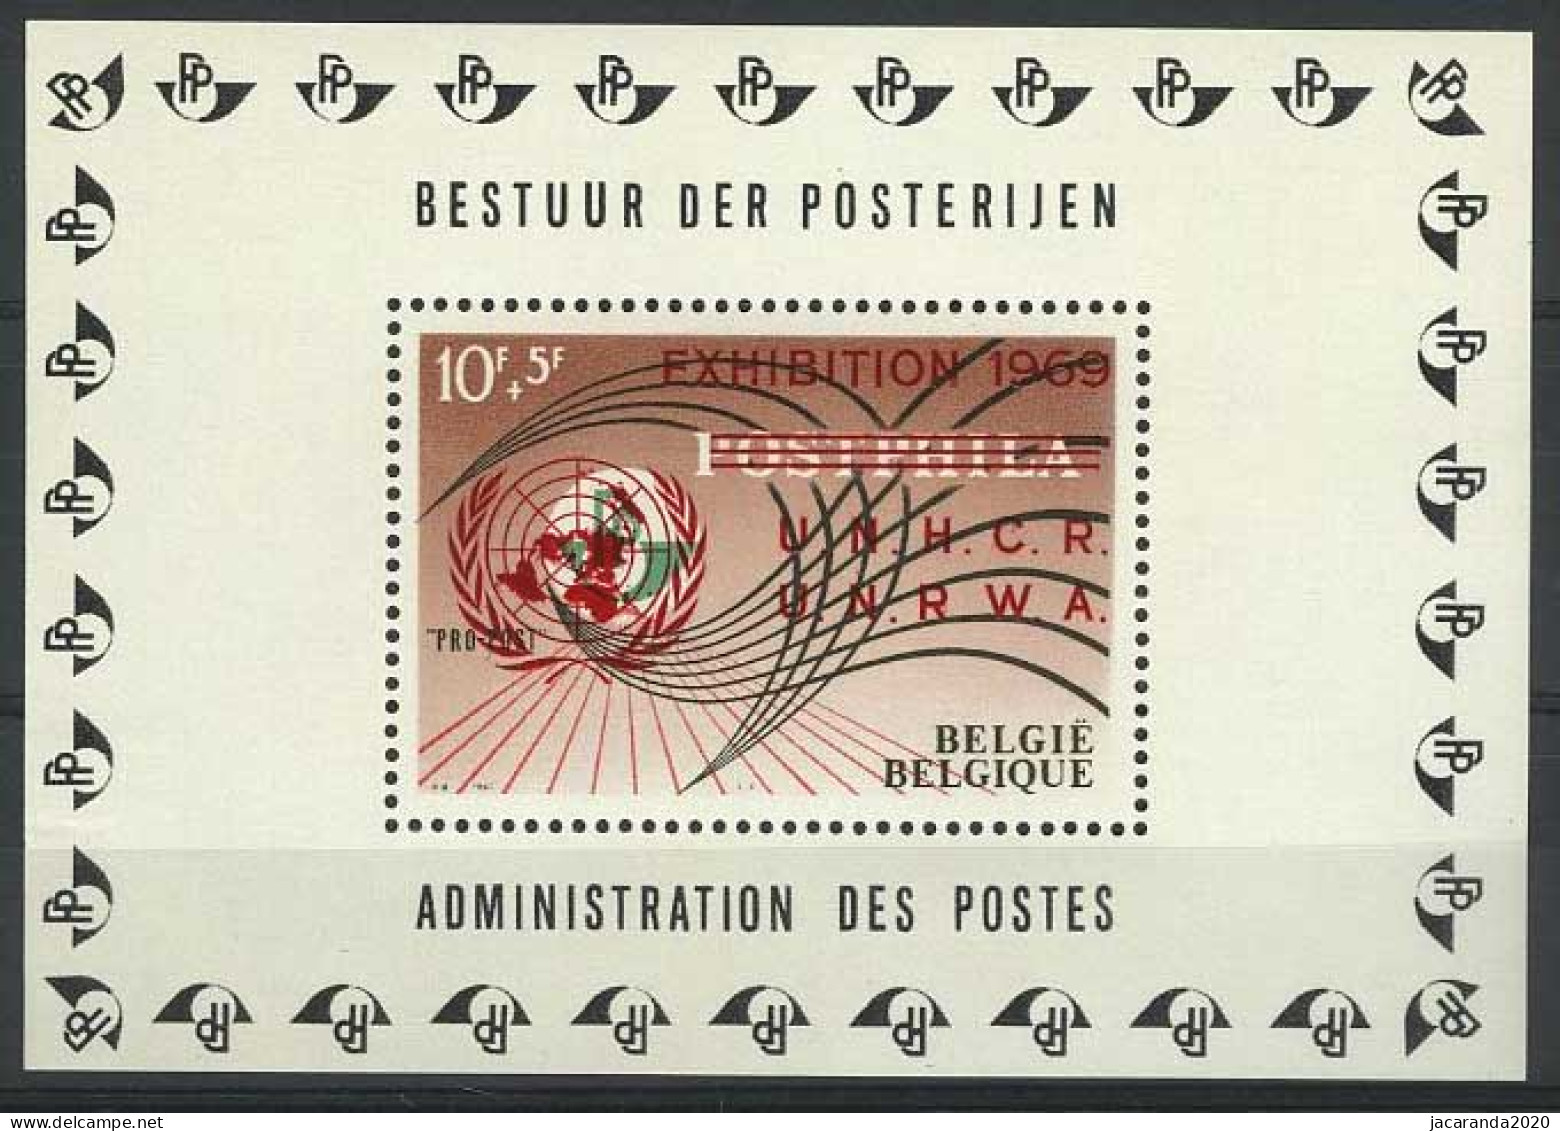 België PR148 ** - BL44 Met Opdruk "Exhibition 1969 U.N.R.W.A. - U.N.H.C.R." En Embleem Van De Verenigde Naties - Private & Local Mails [PR & LO]